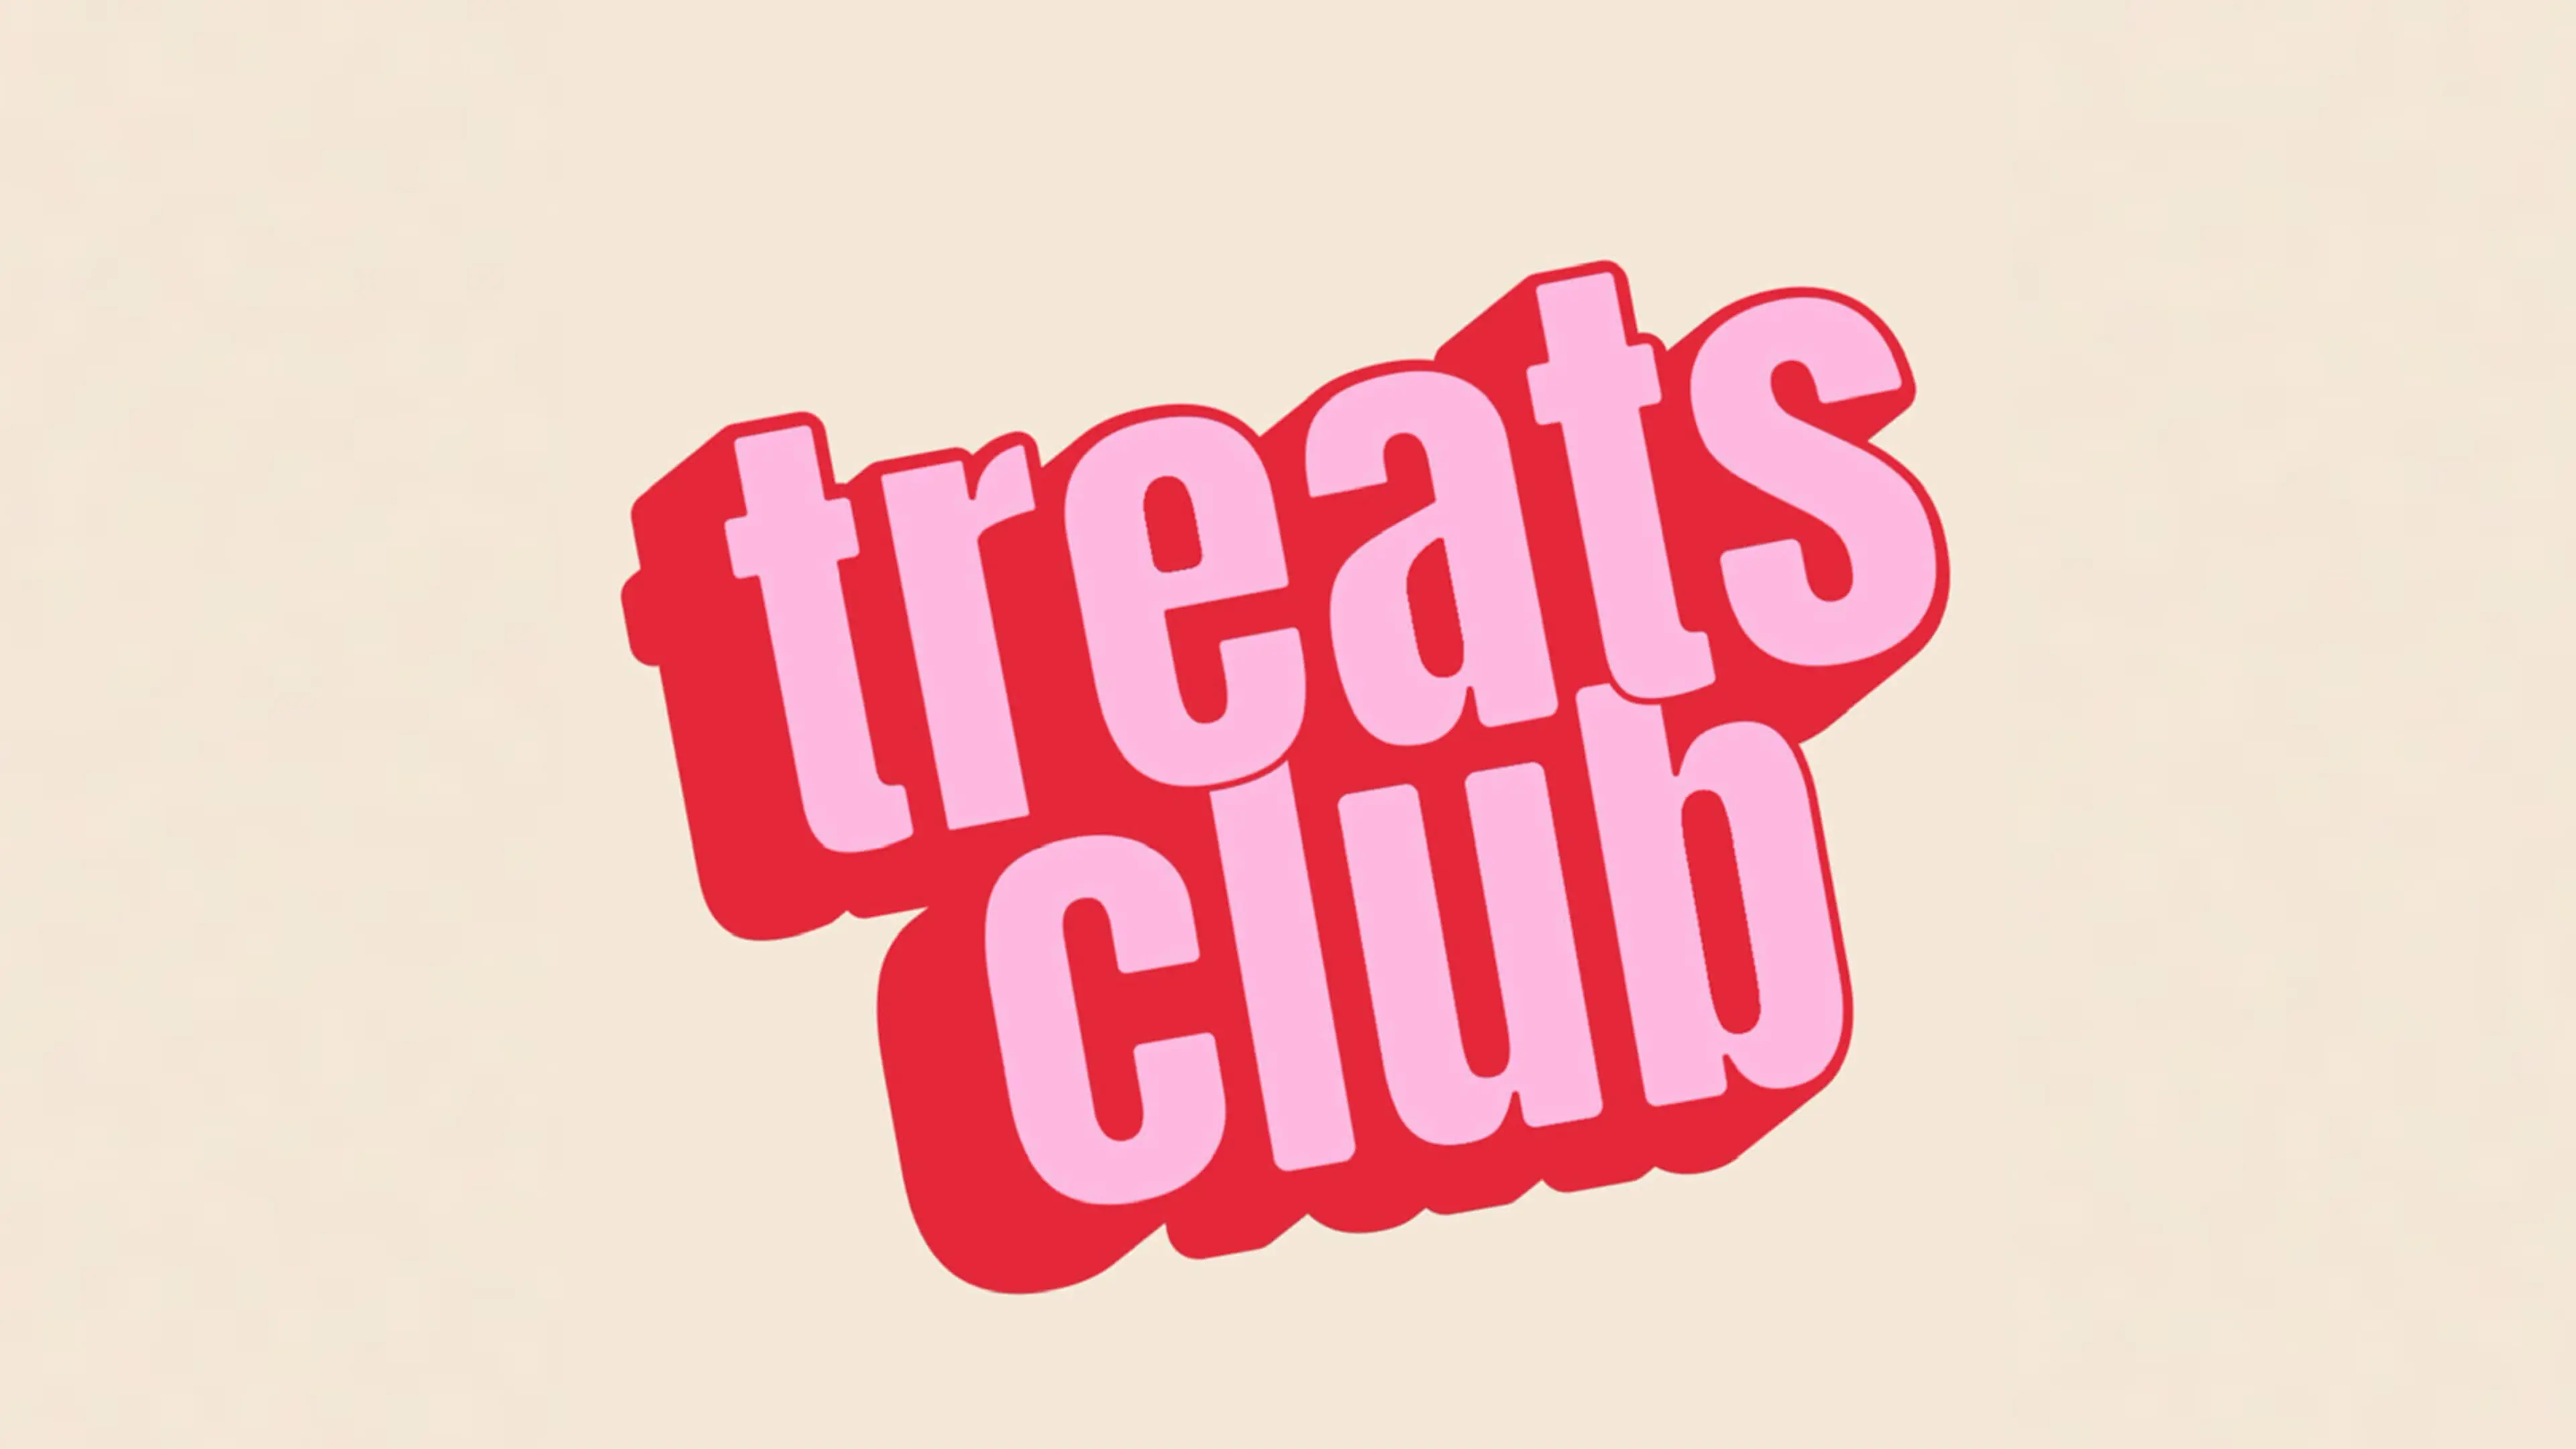 Treats Club